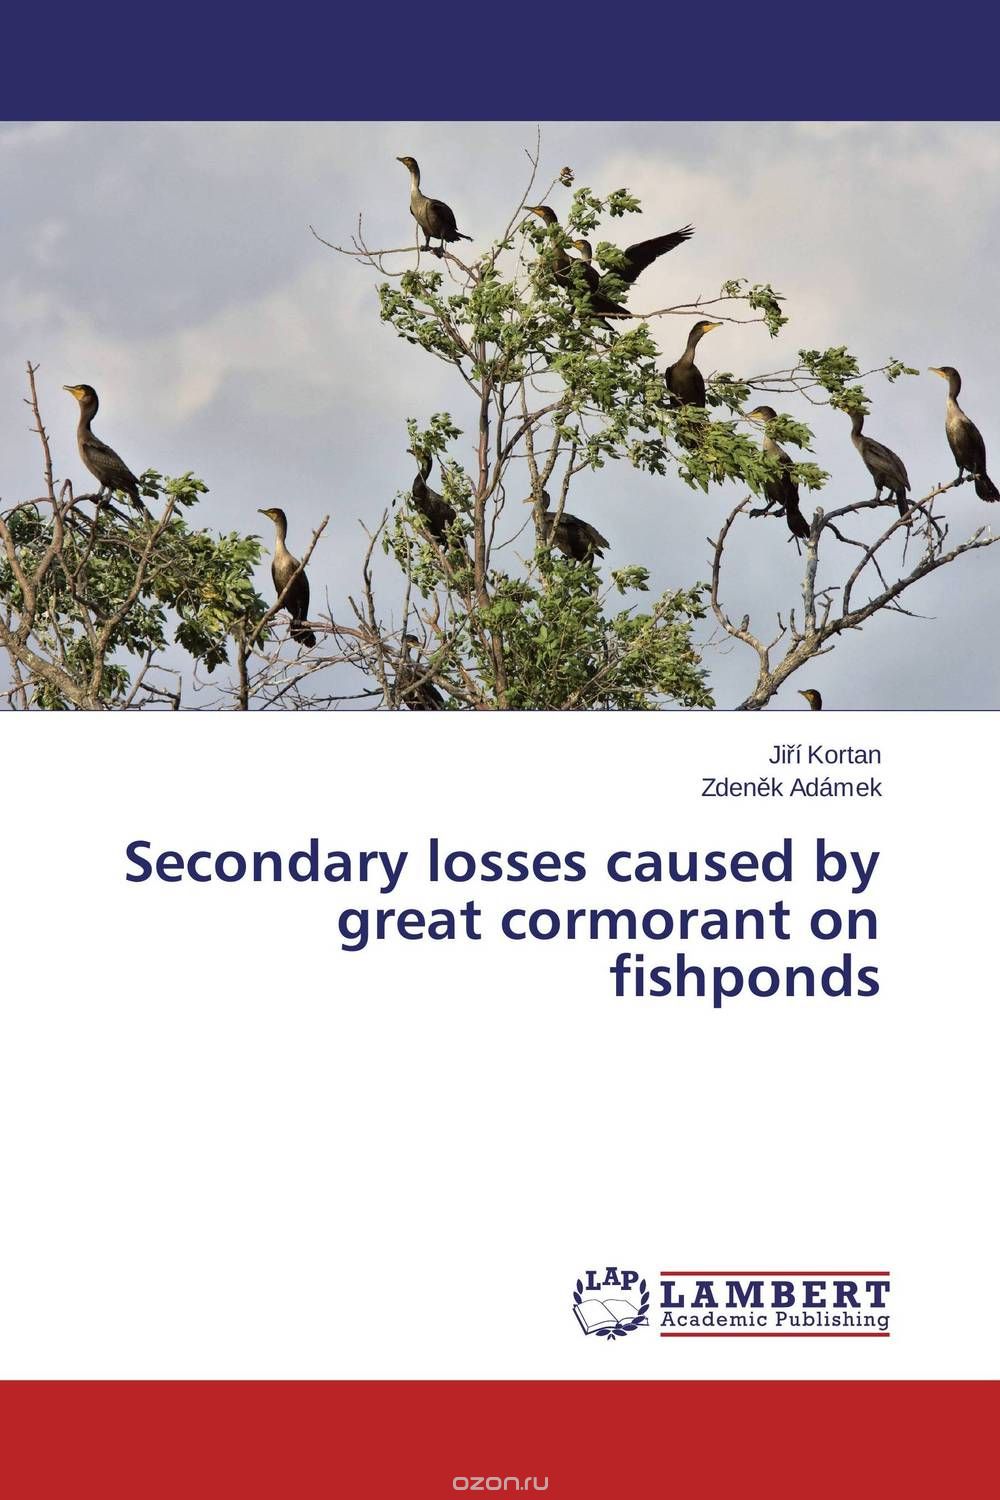 Скачать книгу "Secondary losses caused by great cormorant on fishponds"